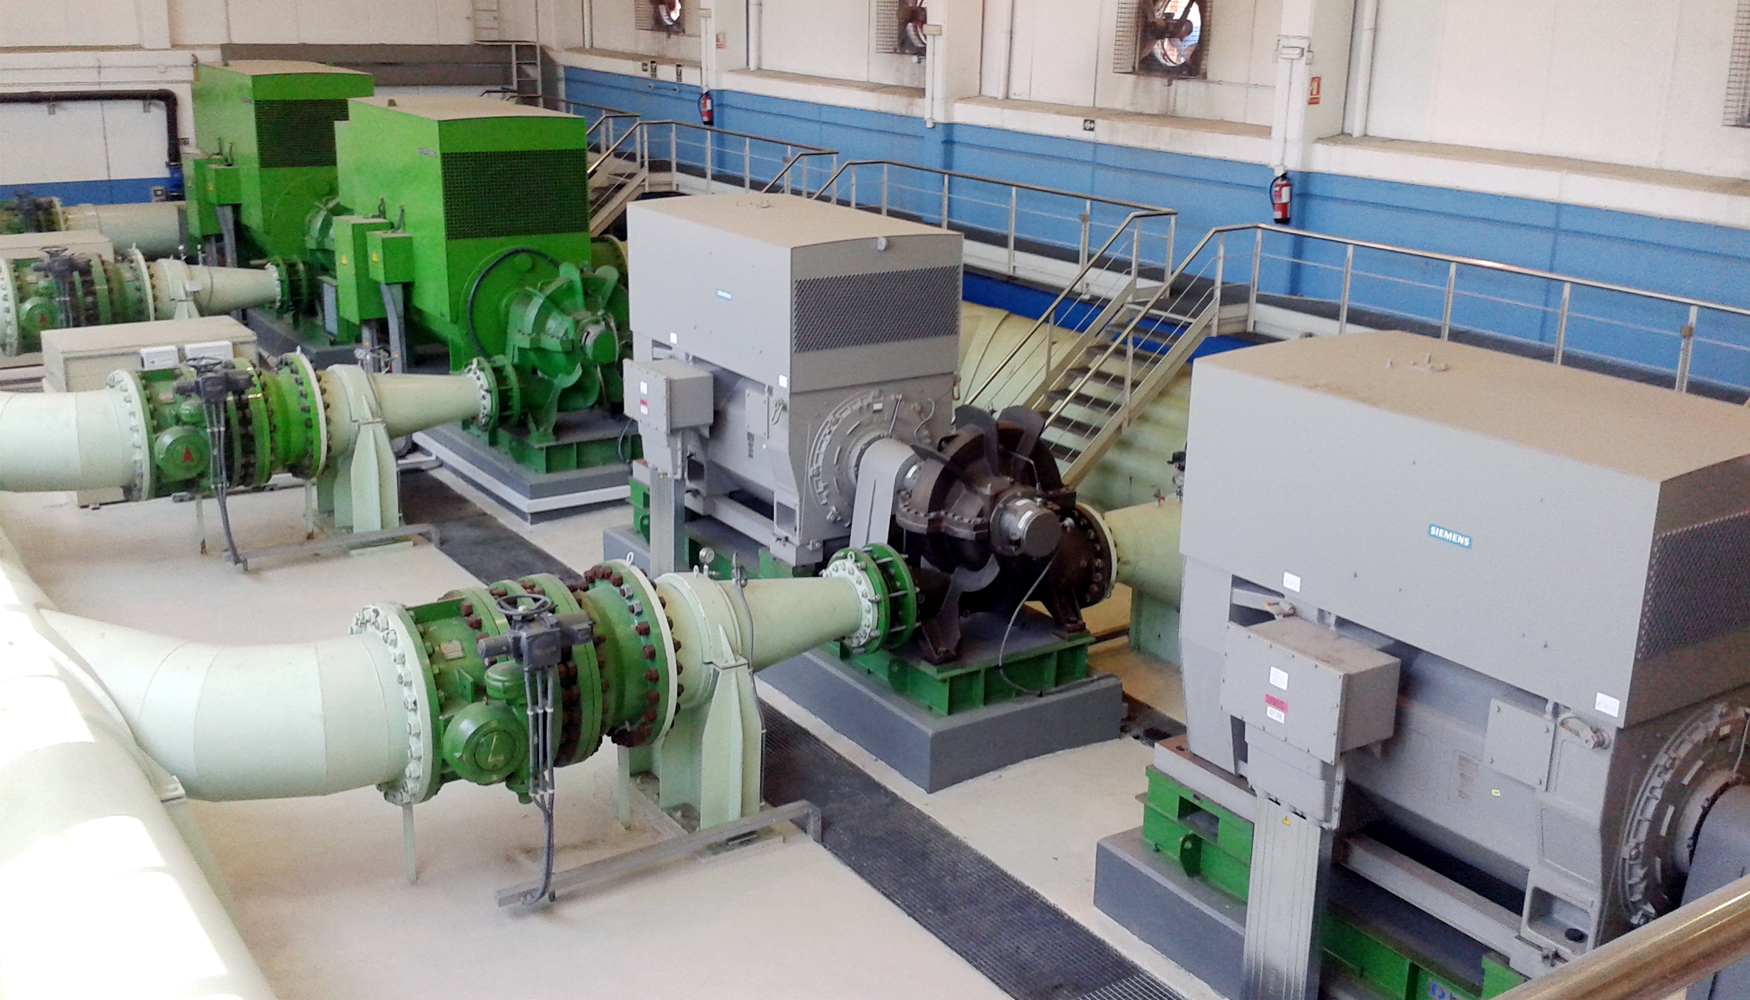 Monitorizacin del motor-bomba de rotor bobinado de 2,8 MW